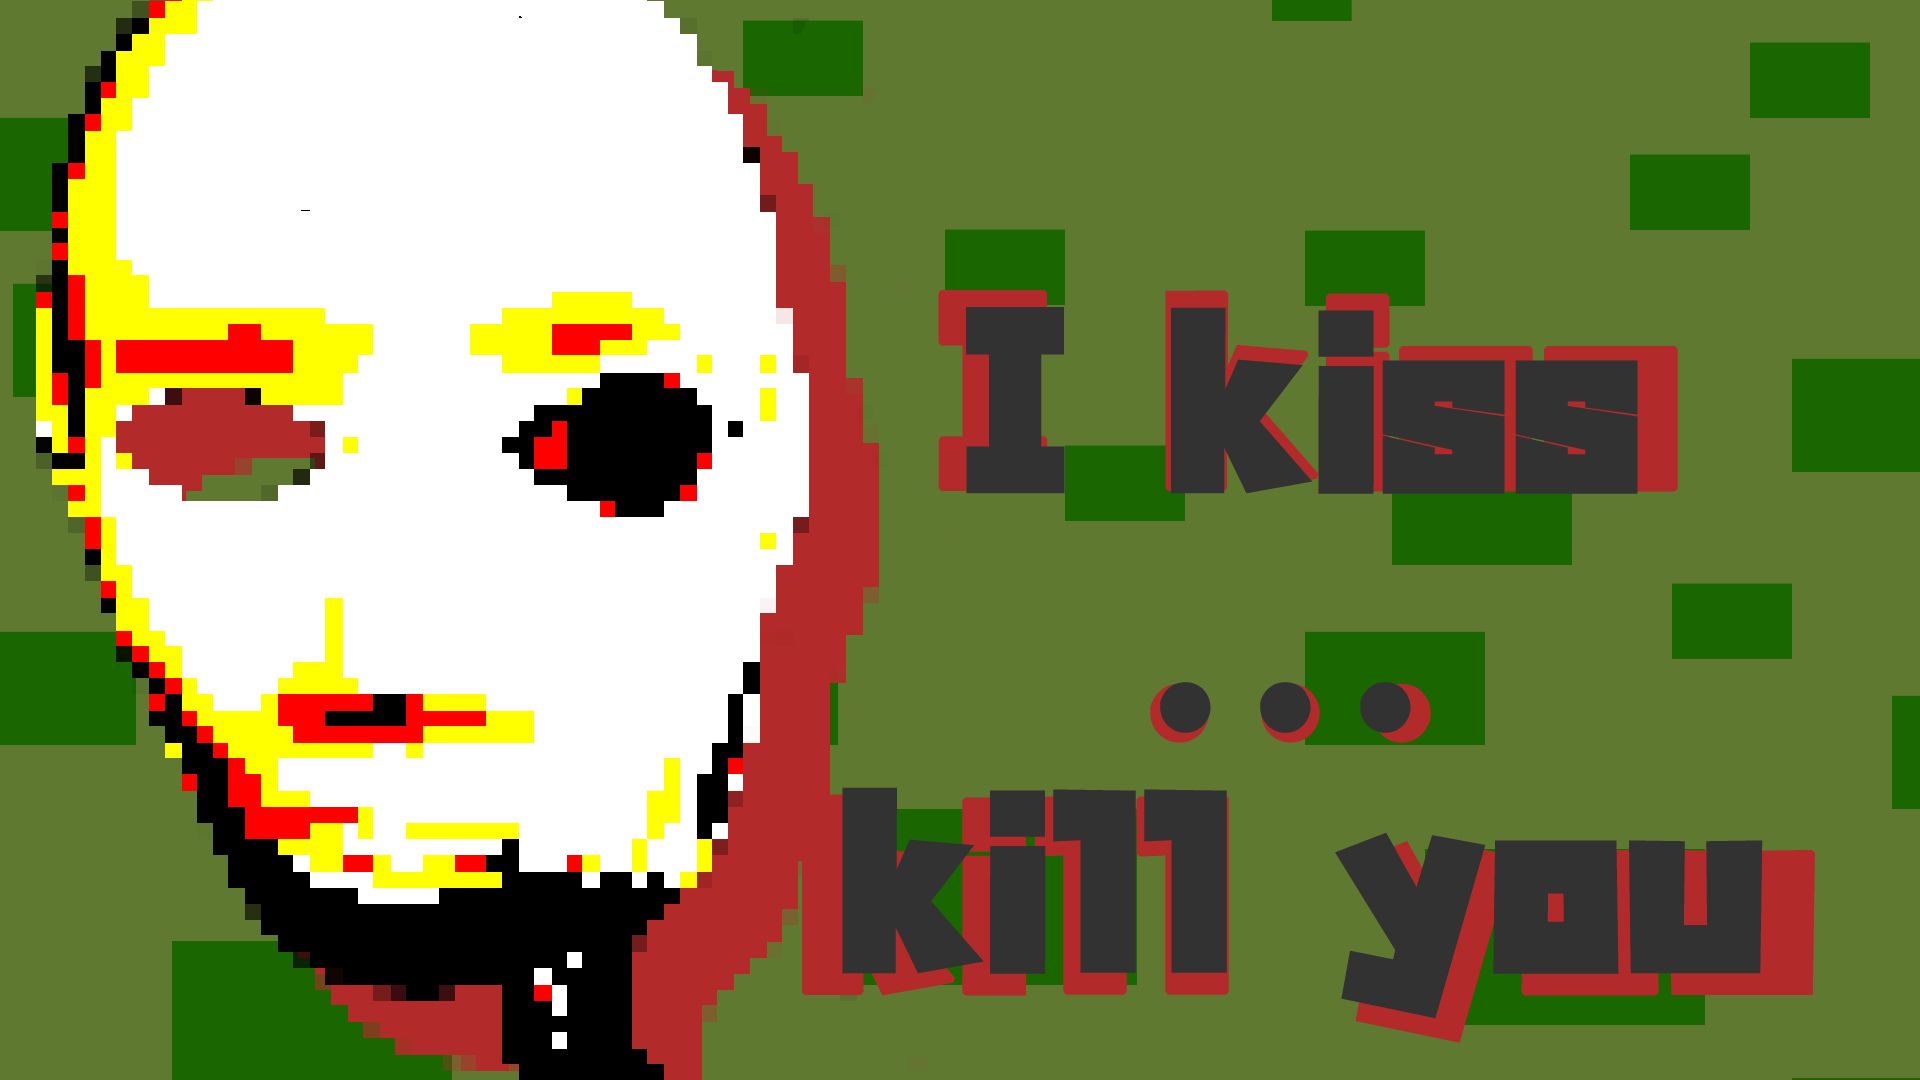 I kiss... kill you